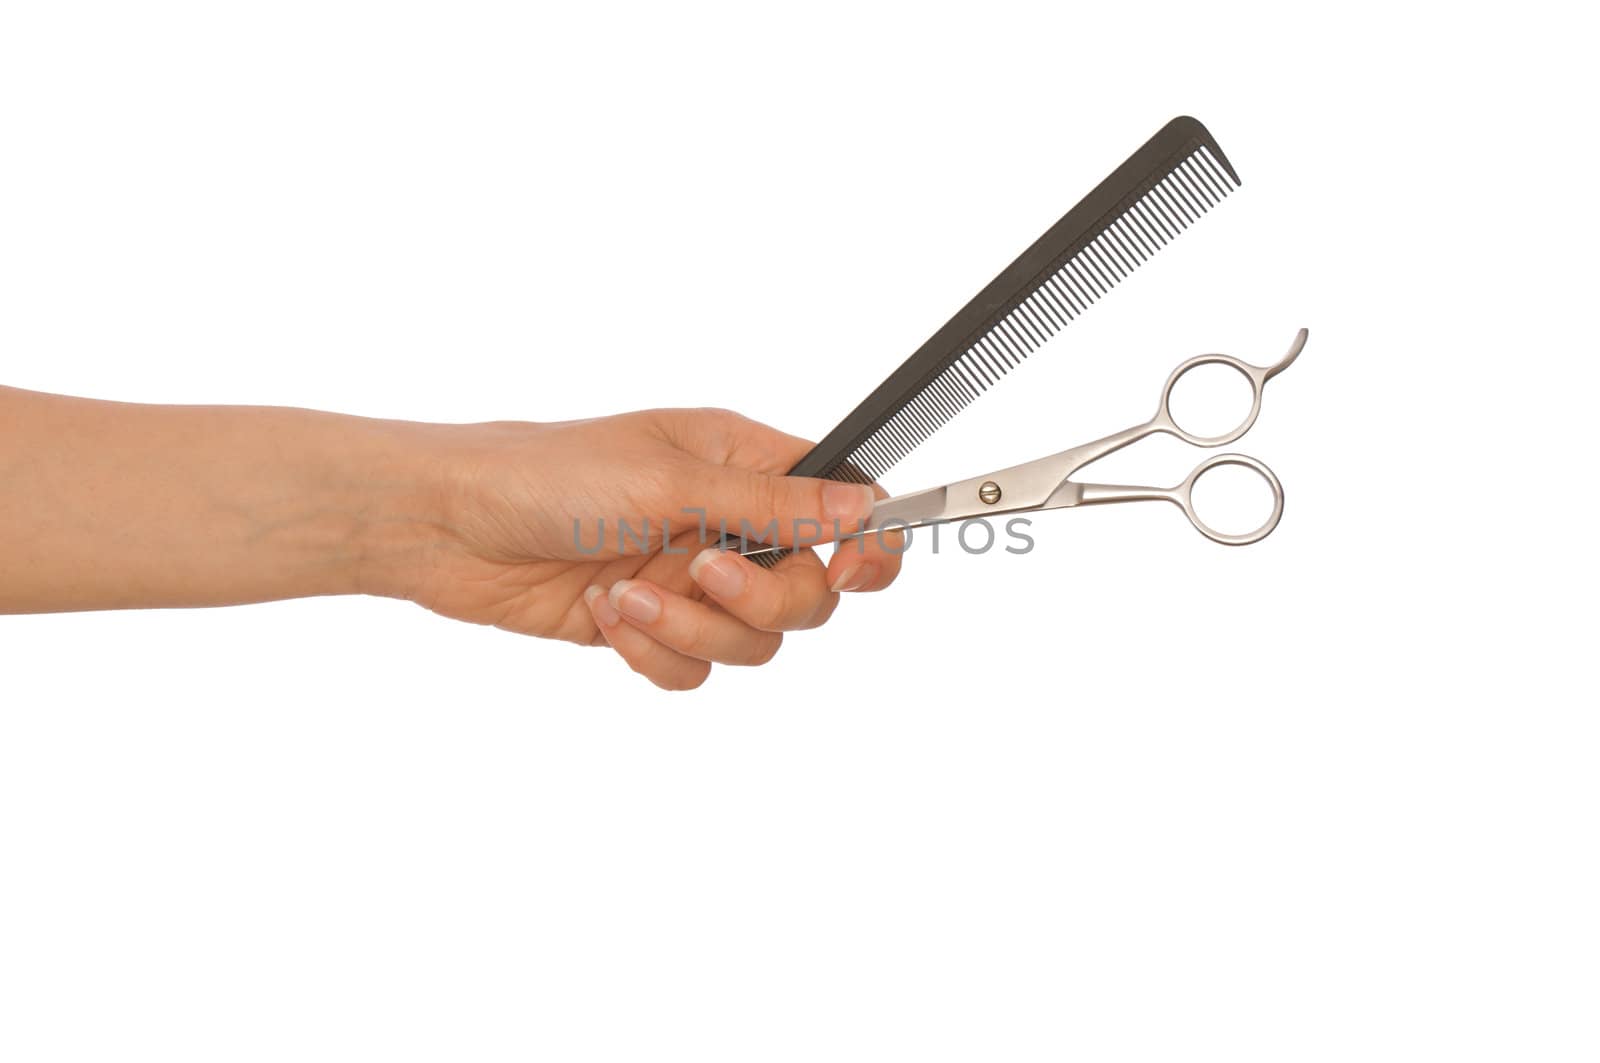 hairdresser holds scissors and hairbrush for haircut